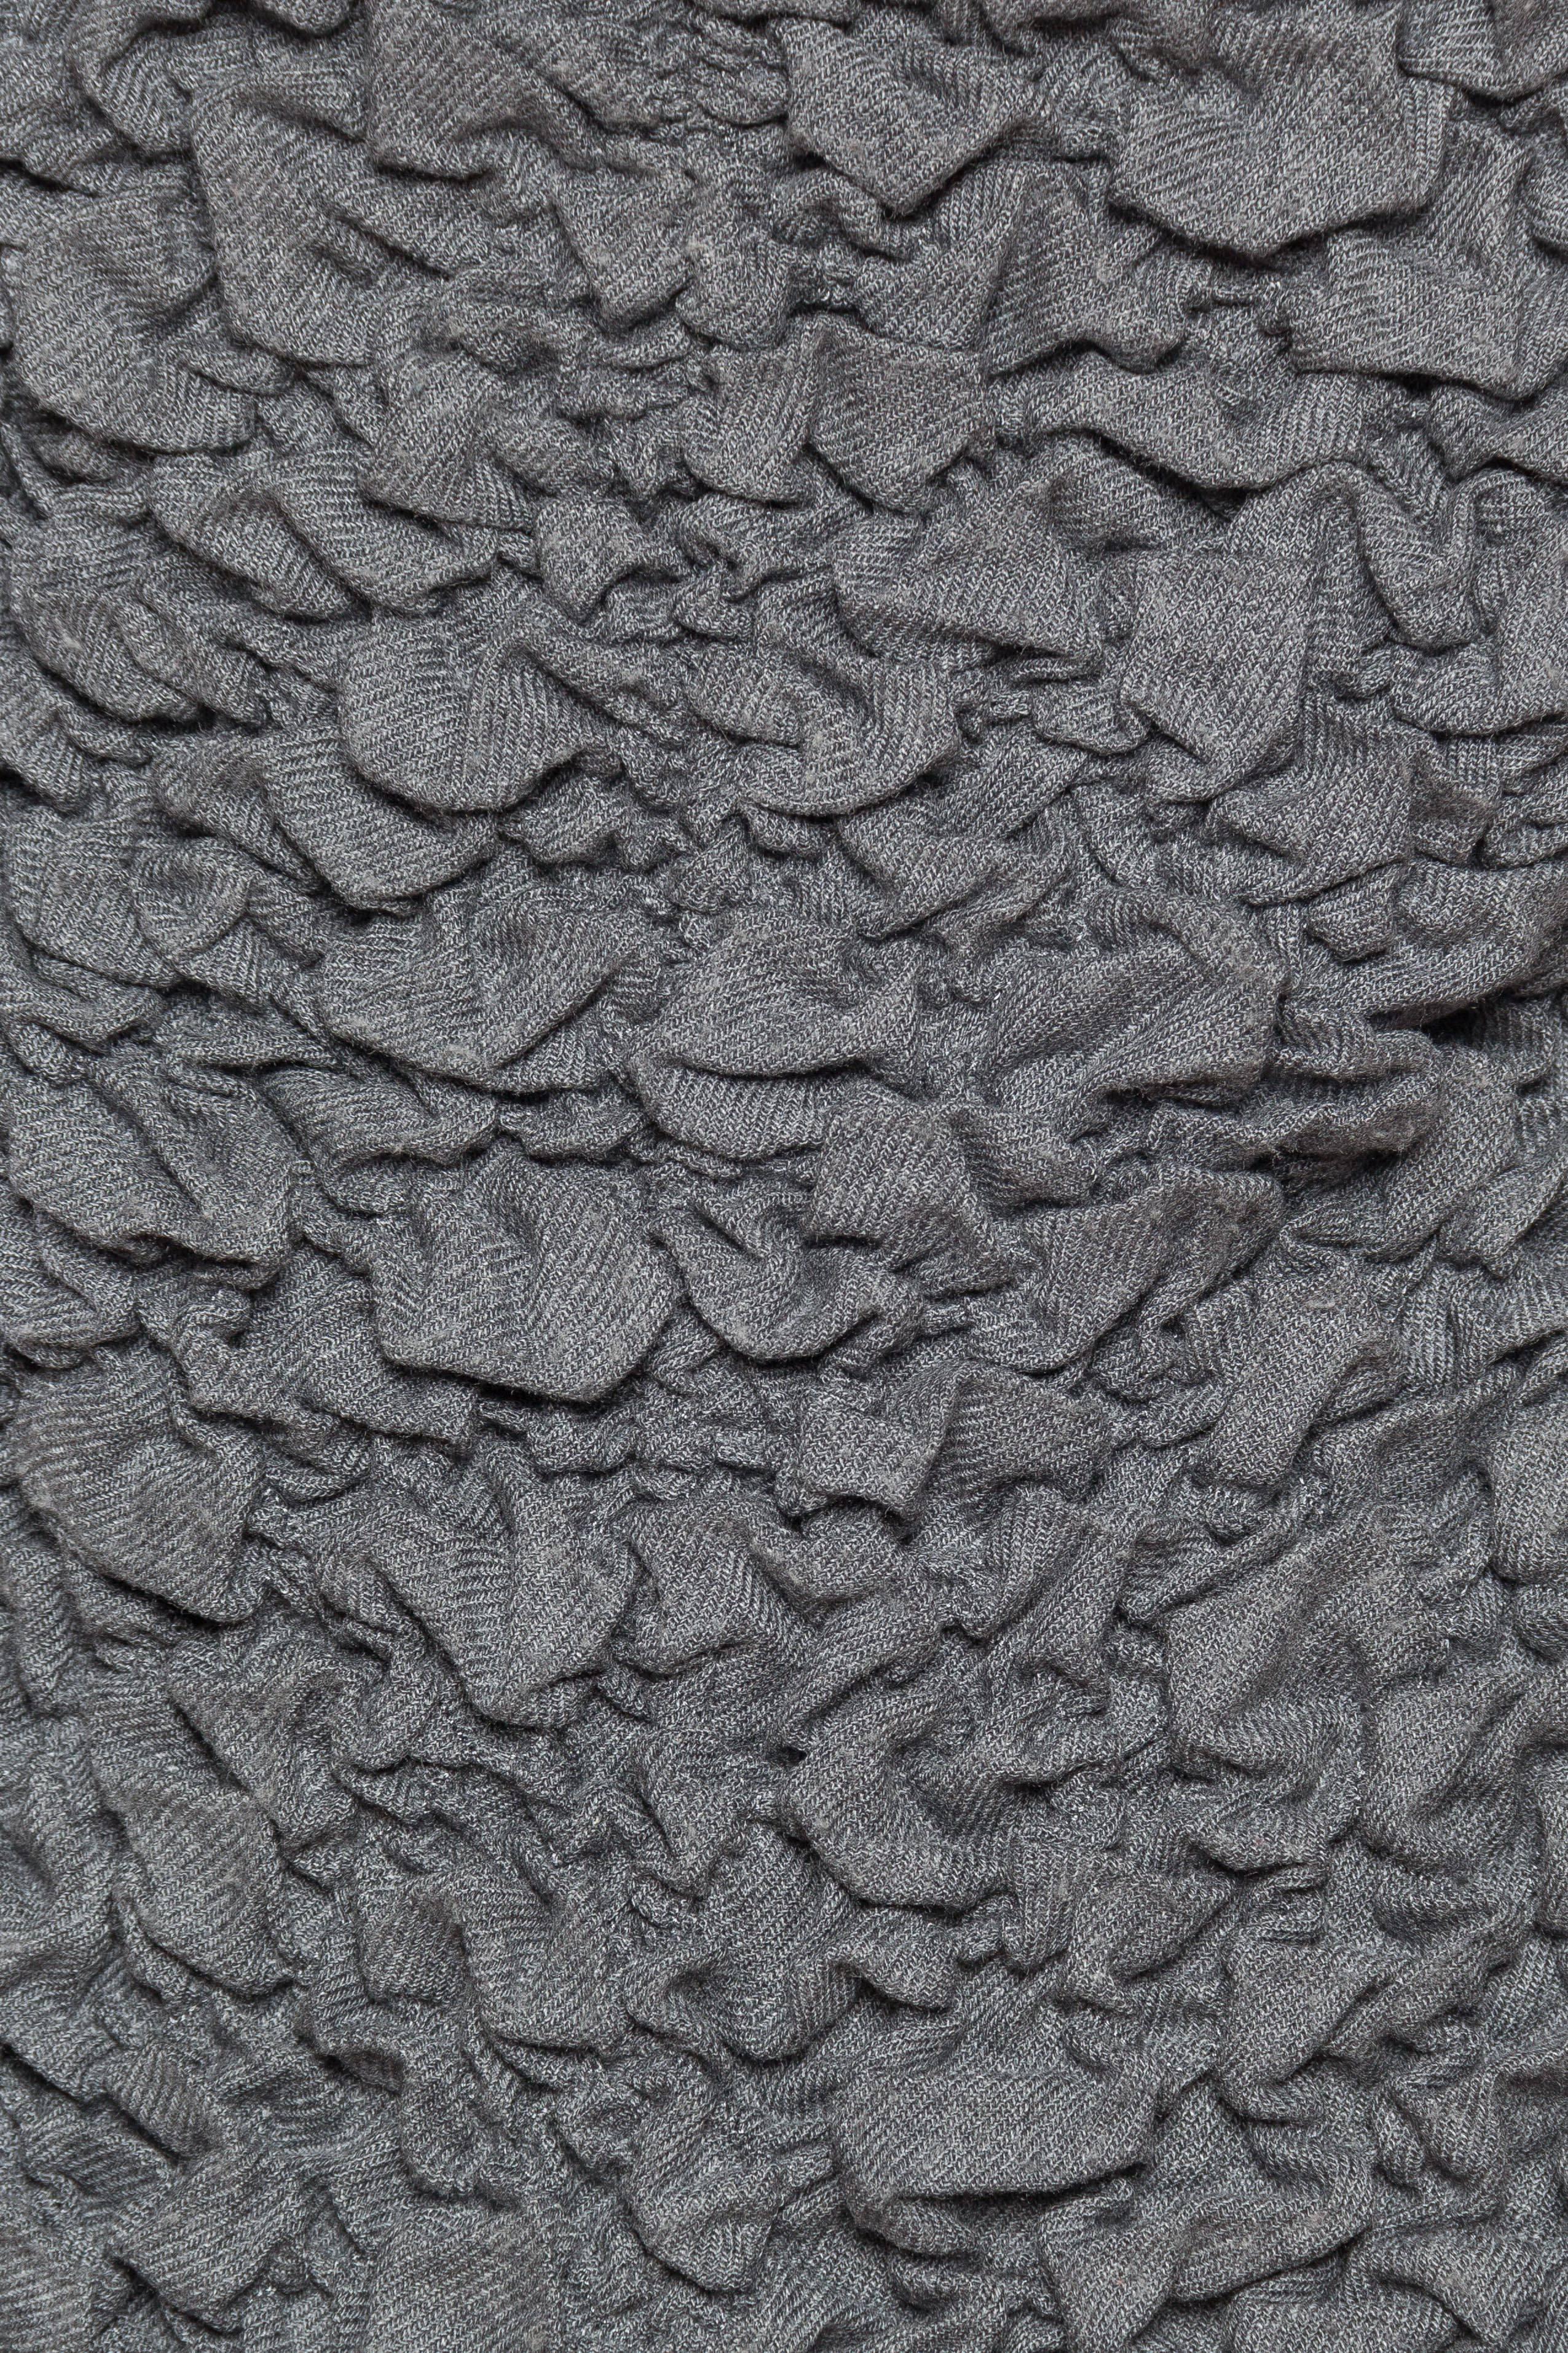 1990S ALEXANDER MCQUEEN Grey Textured Knit Top From Fall 1999 